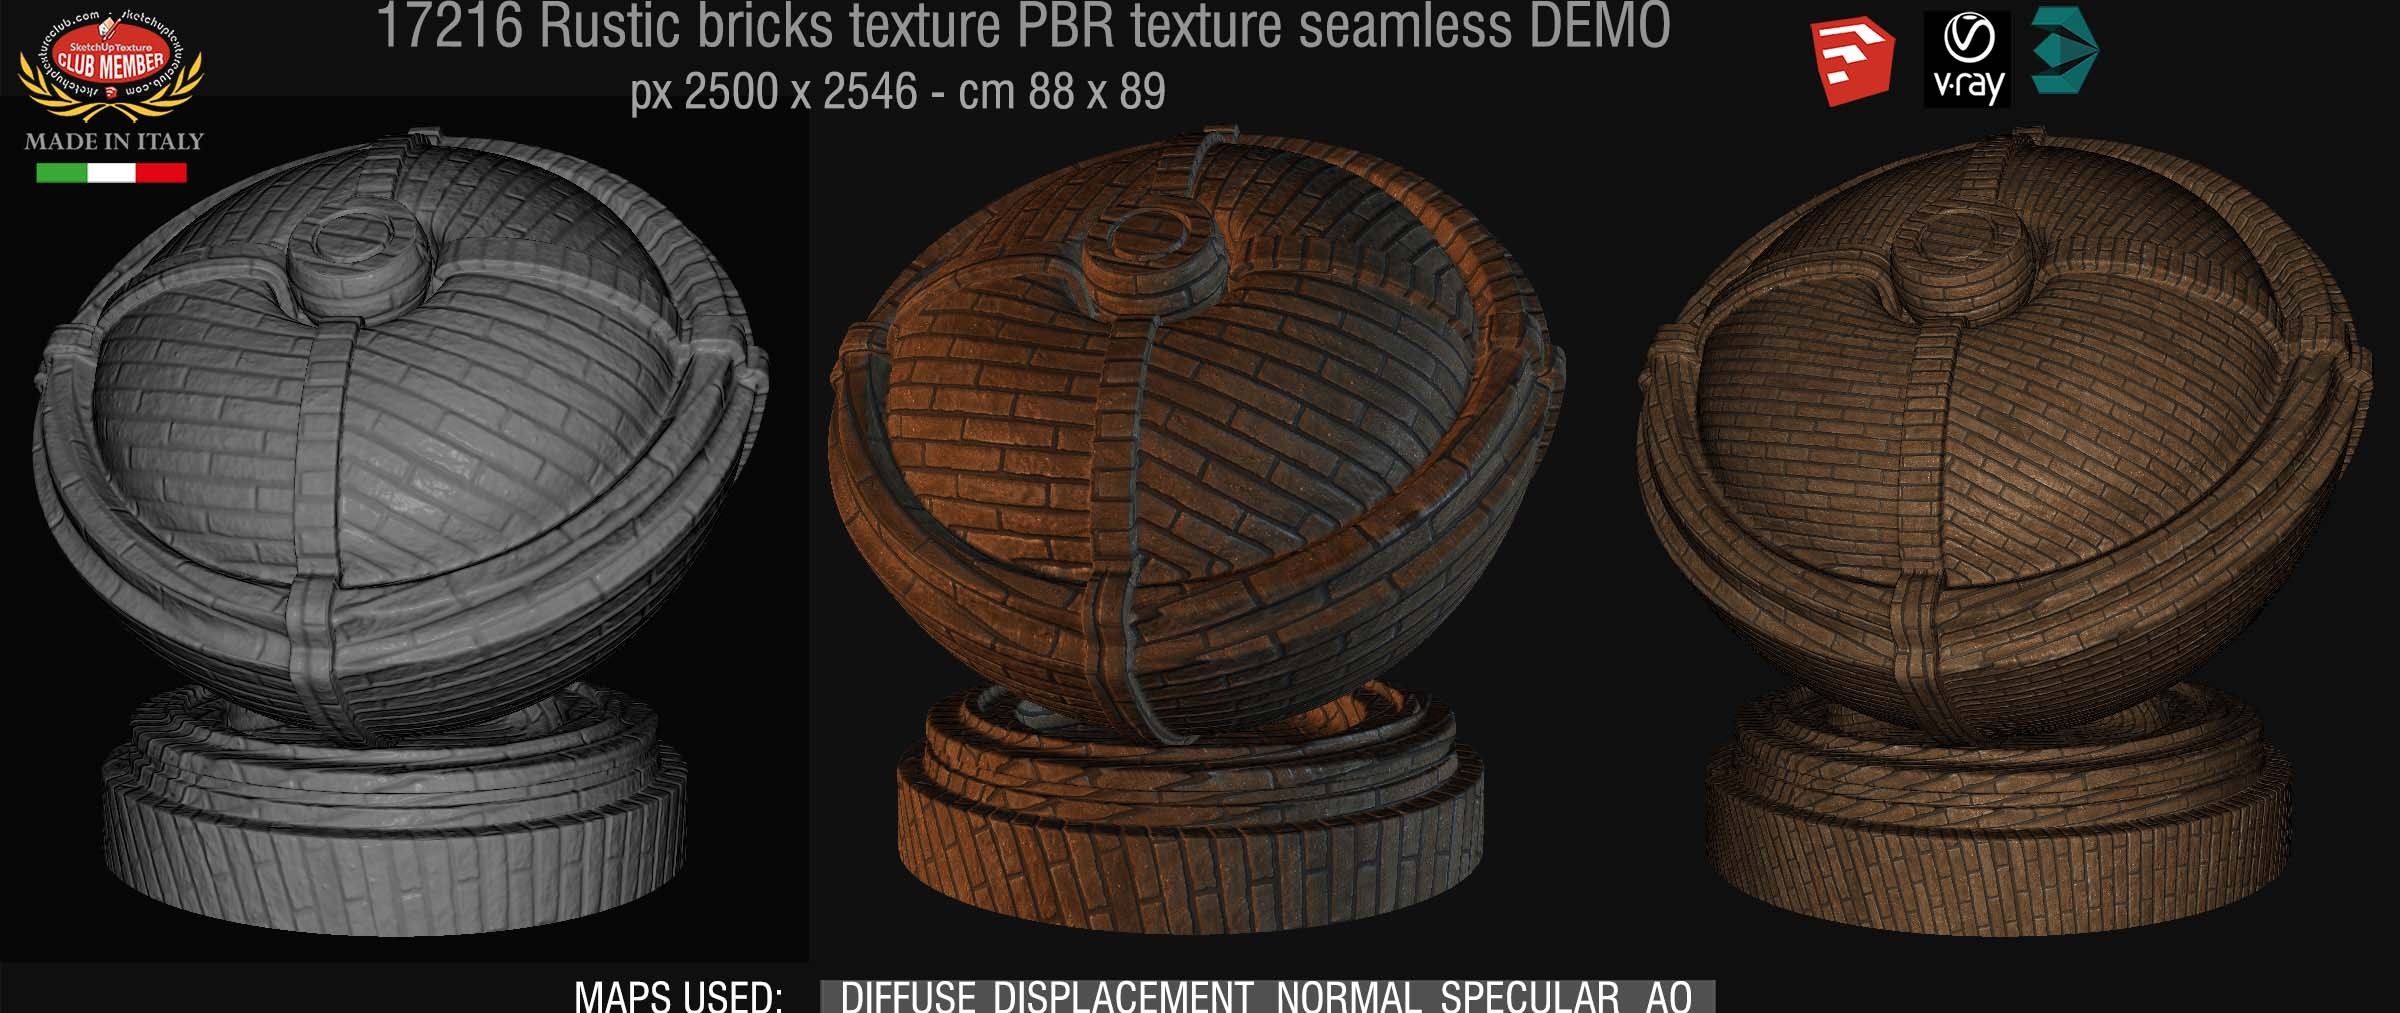 17216 Rustic bricks PBR texture seamless DEMO